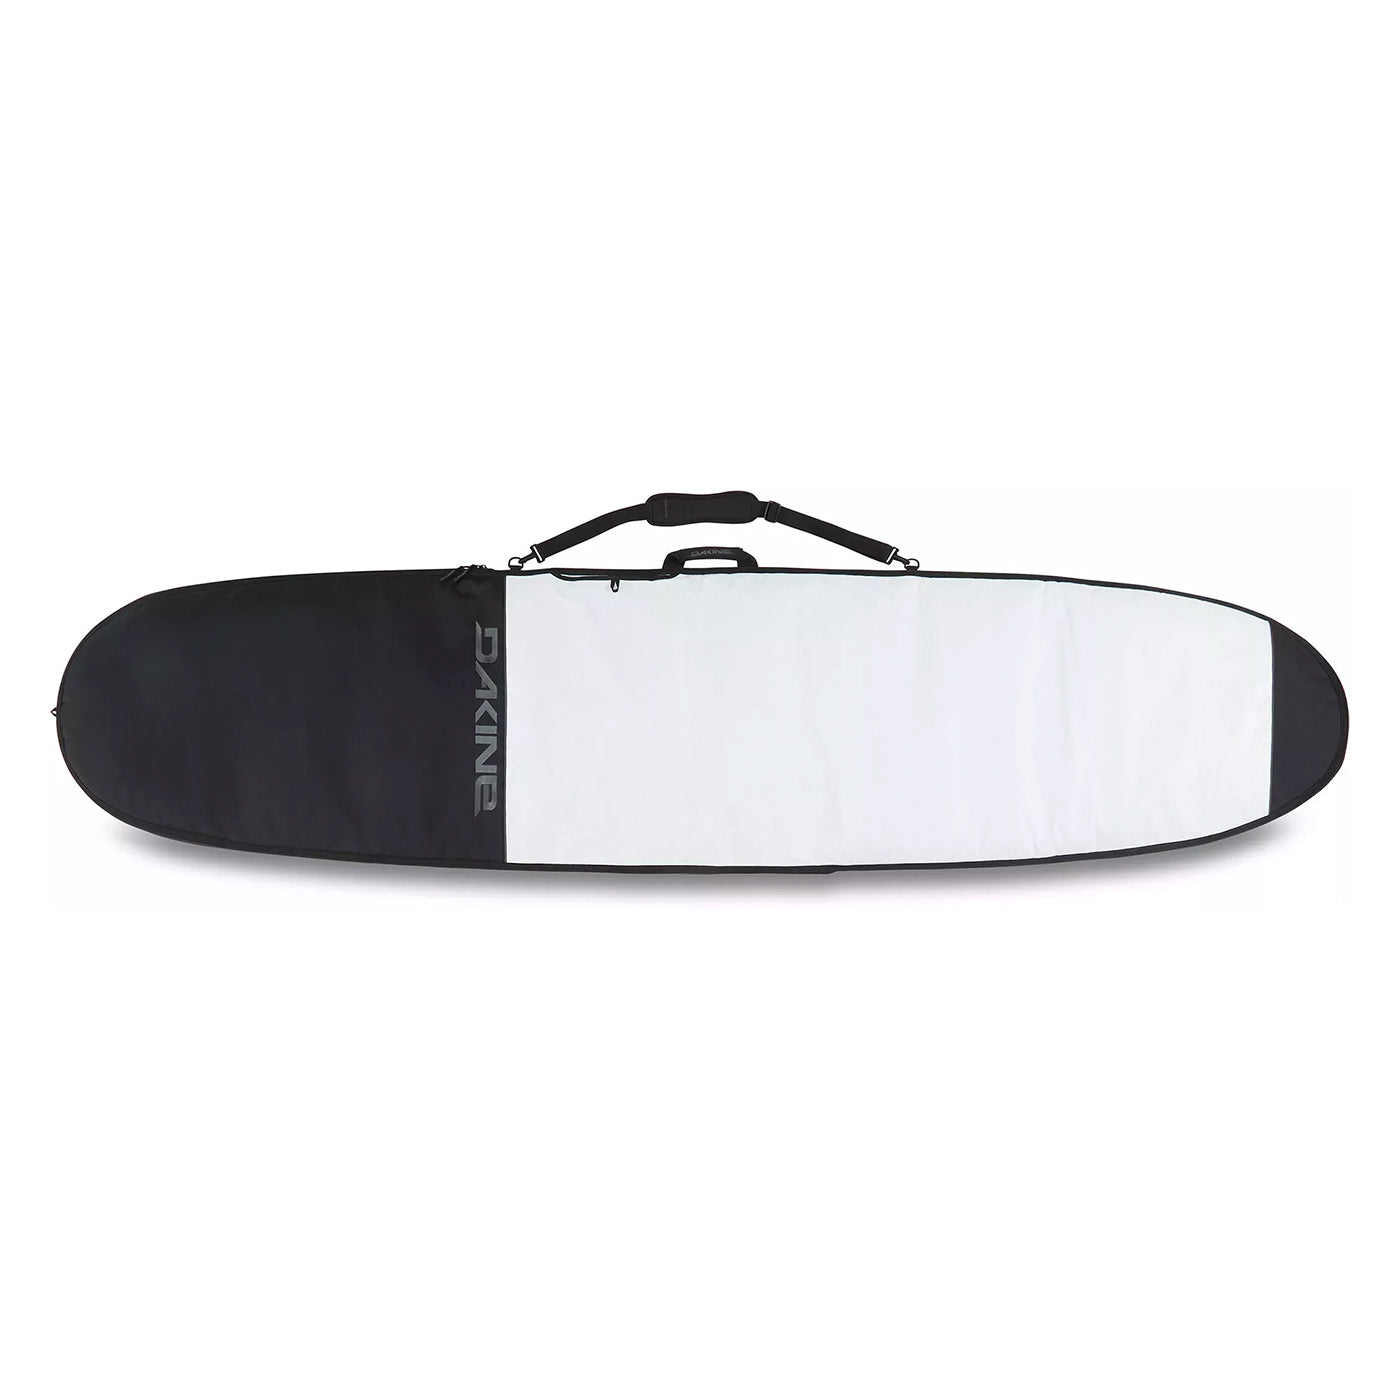 Dakine | Daylight Surfboard Bag